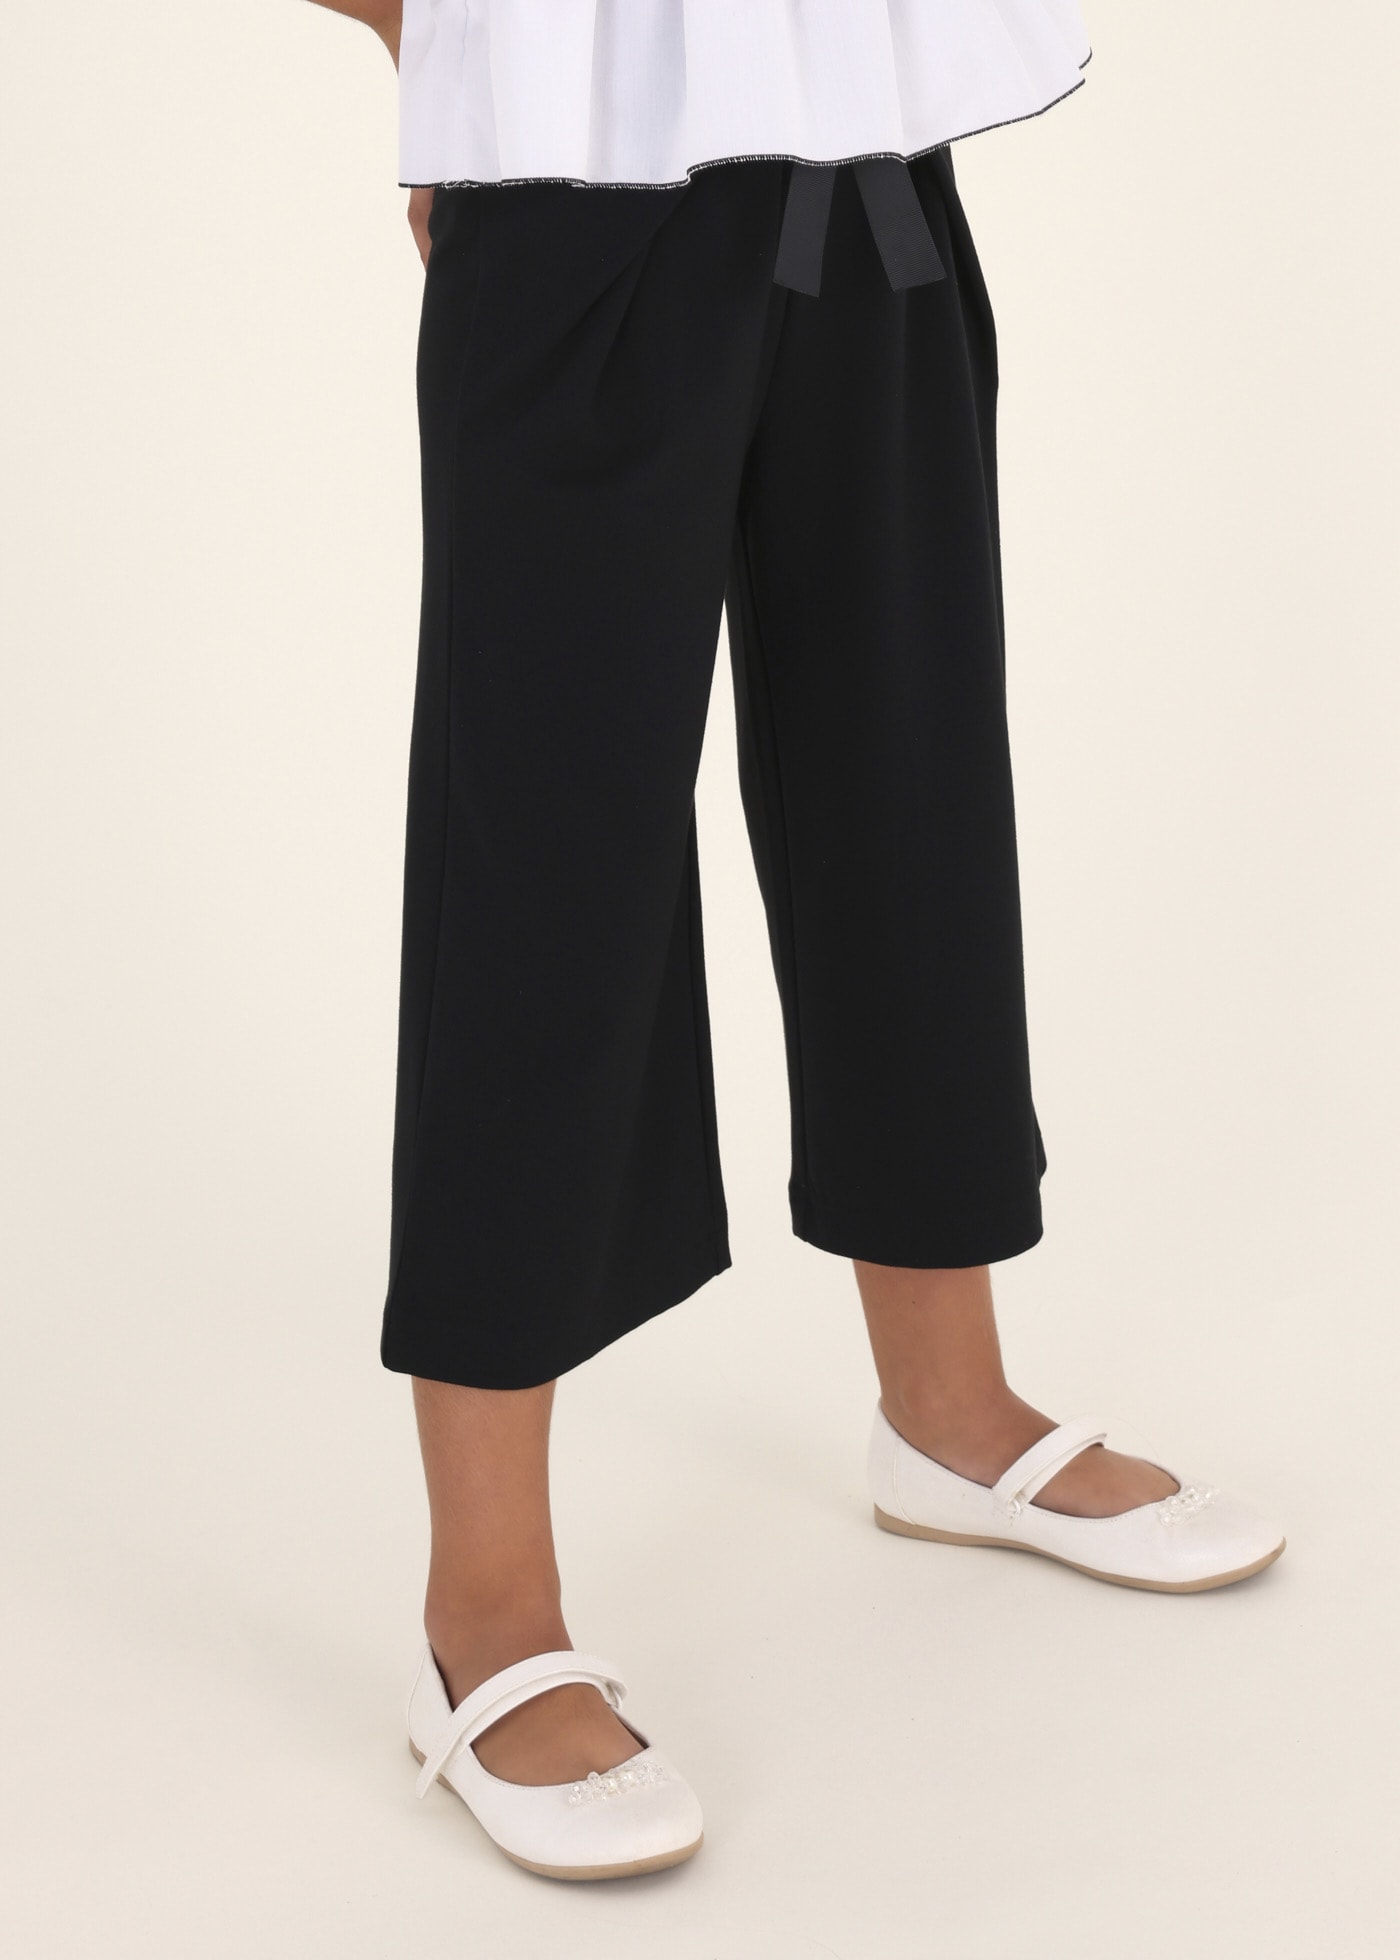 Women039s Fashion High Waist Bow Trousers Pleated Belted Pocket Pants  Harem  eBay